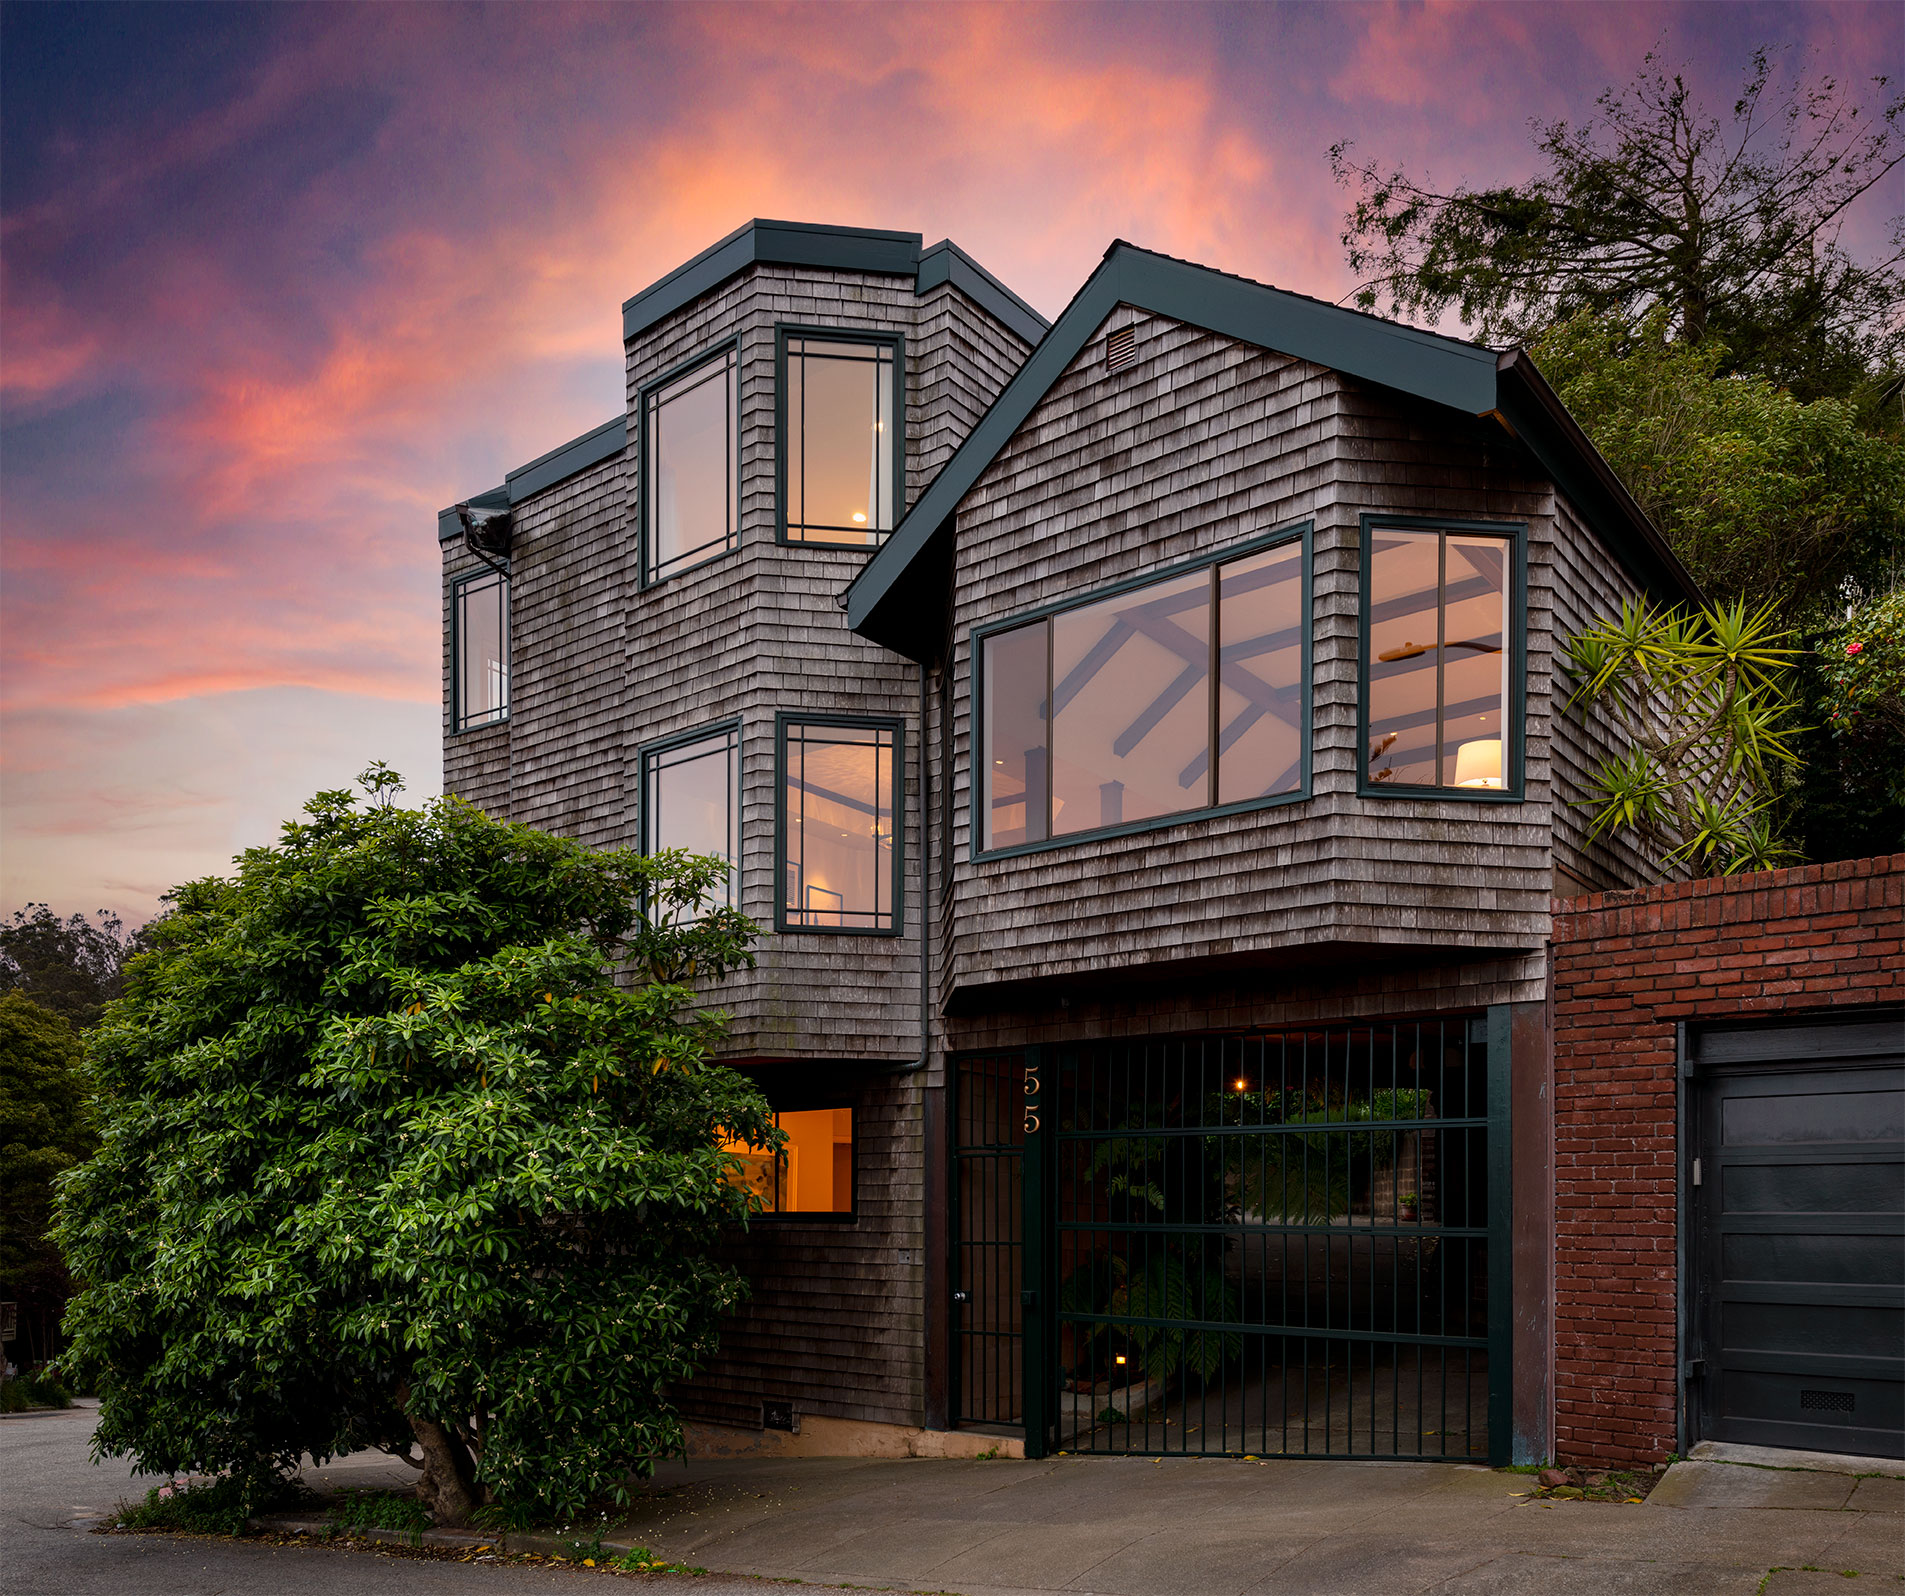 Twilight image of a house near Twin Peaks, San Francisco